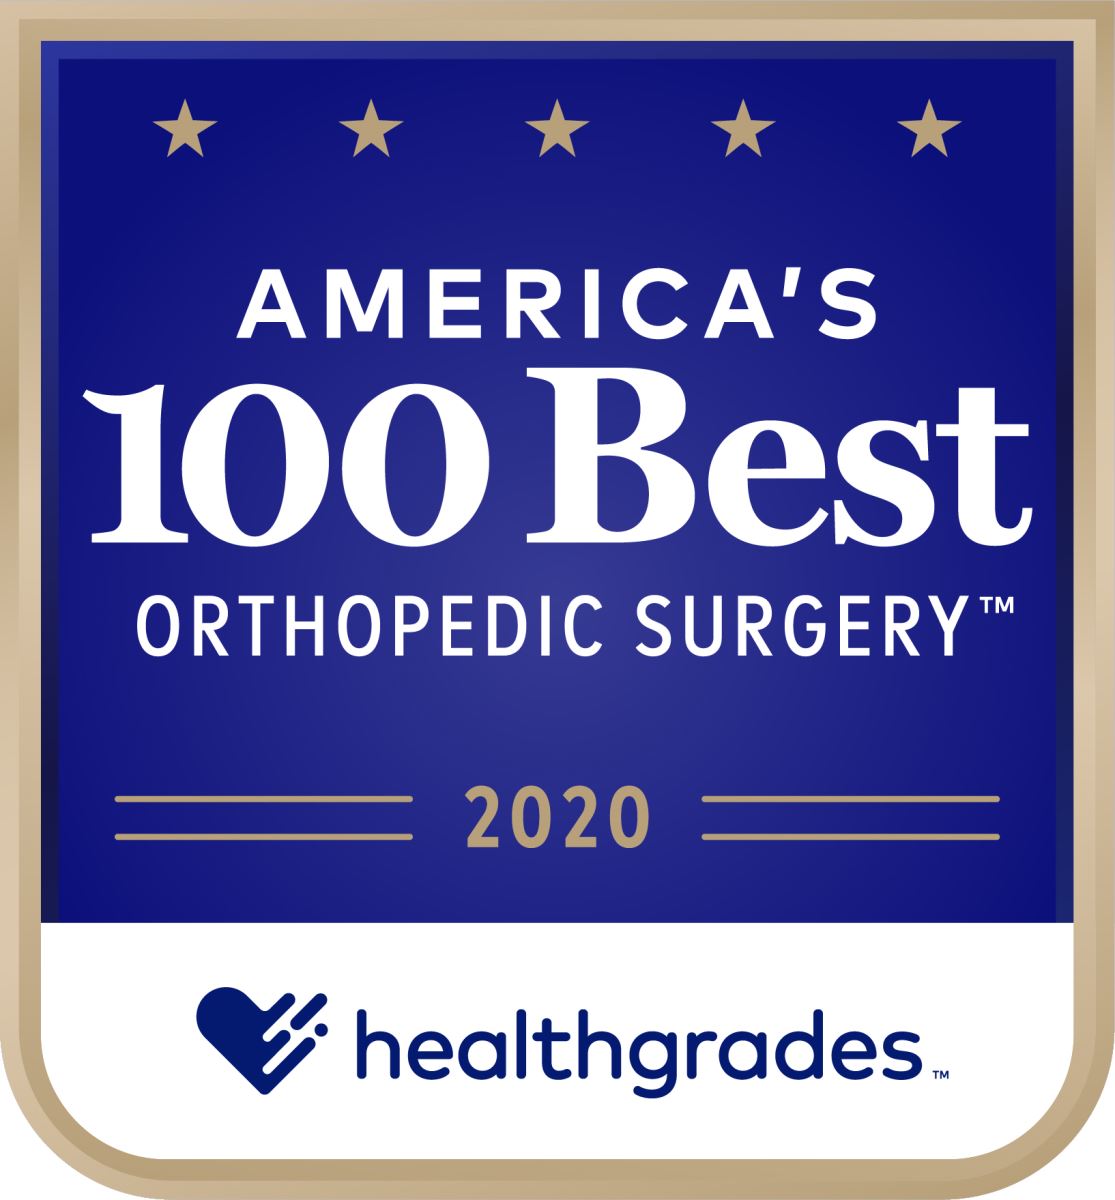 America's 100 Best Orthopedic Surgery 2020